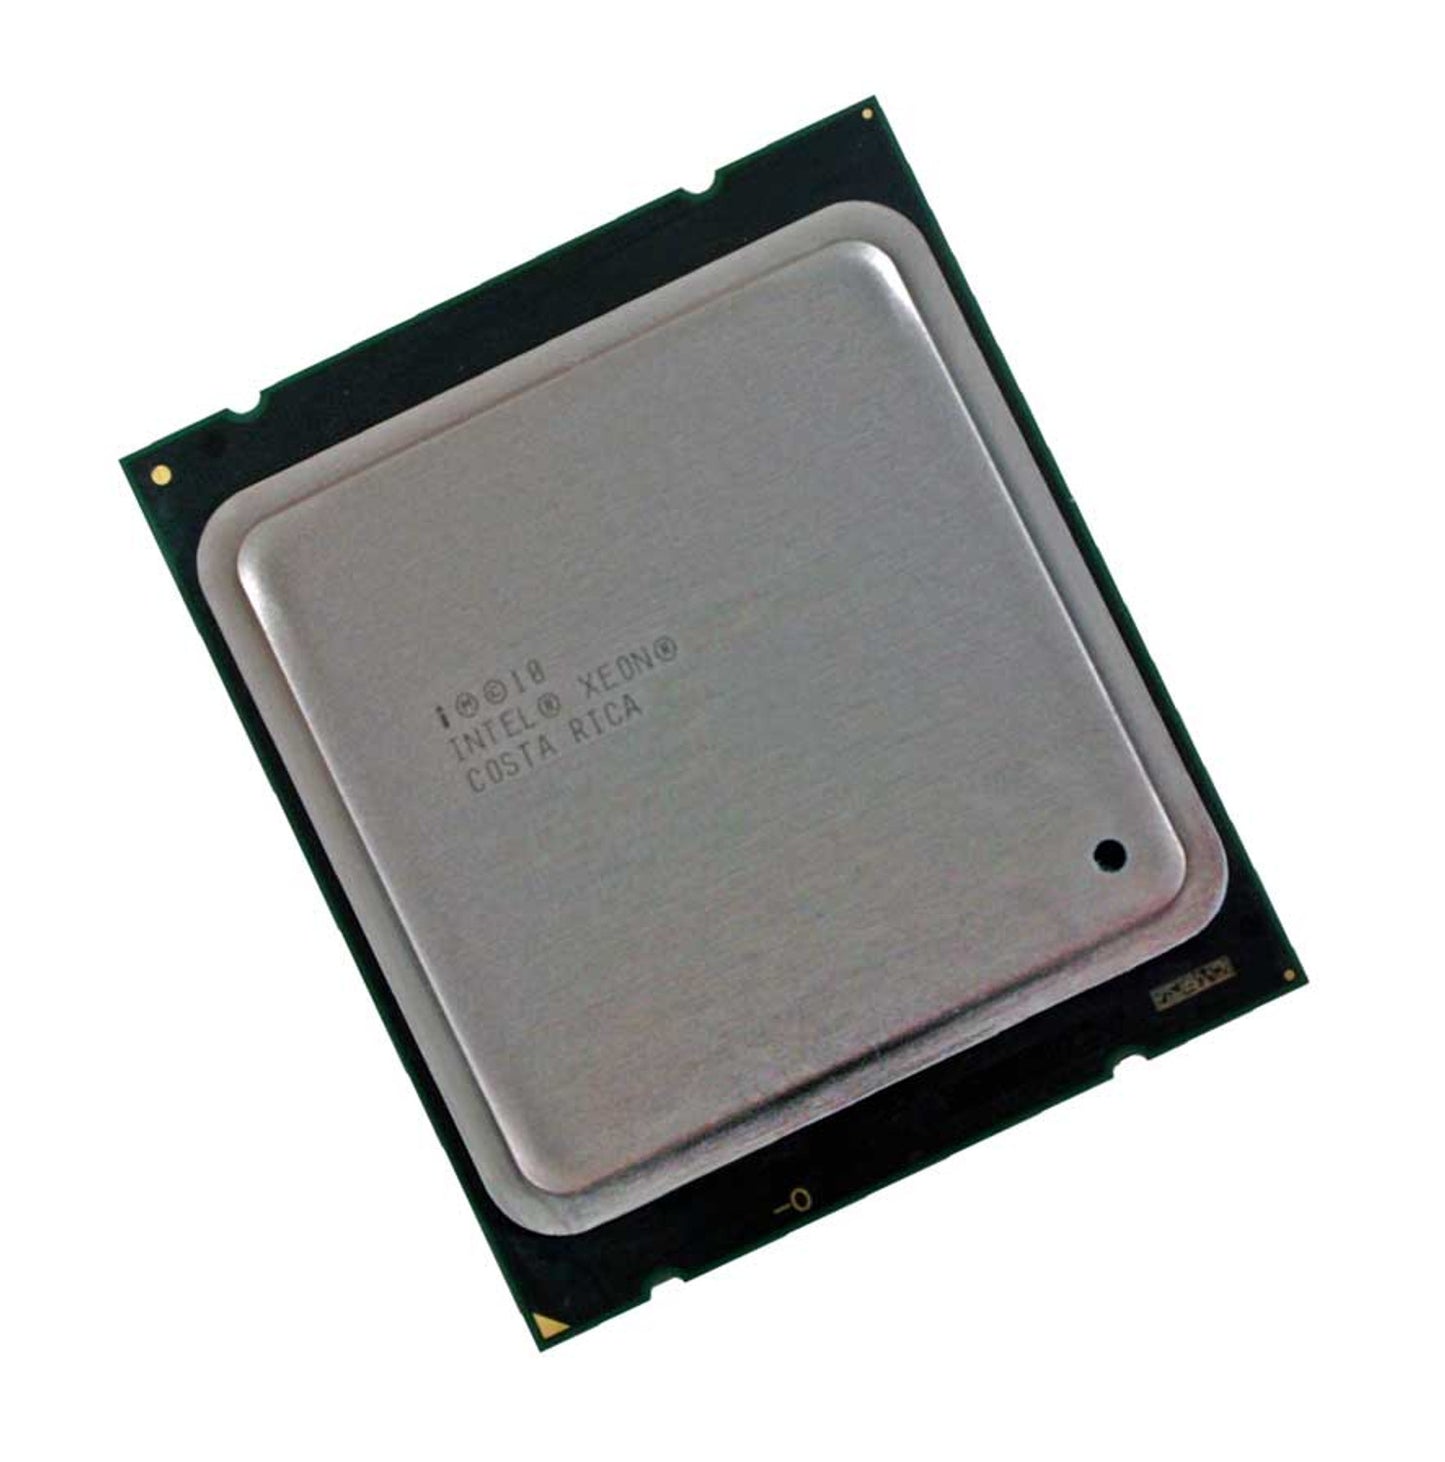 HP Z820 XN E5-2643 4C 3.30GHZ PROCESSOR